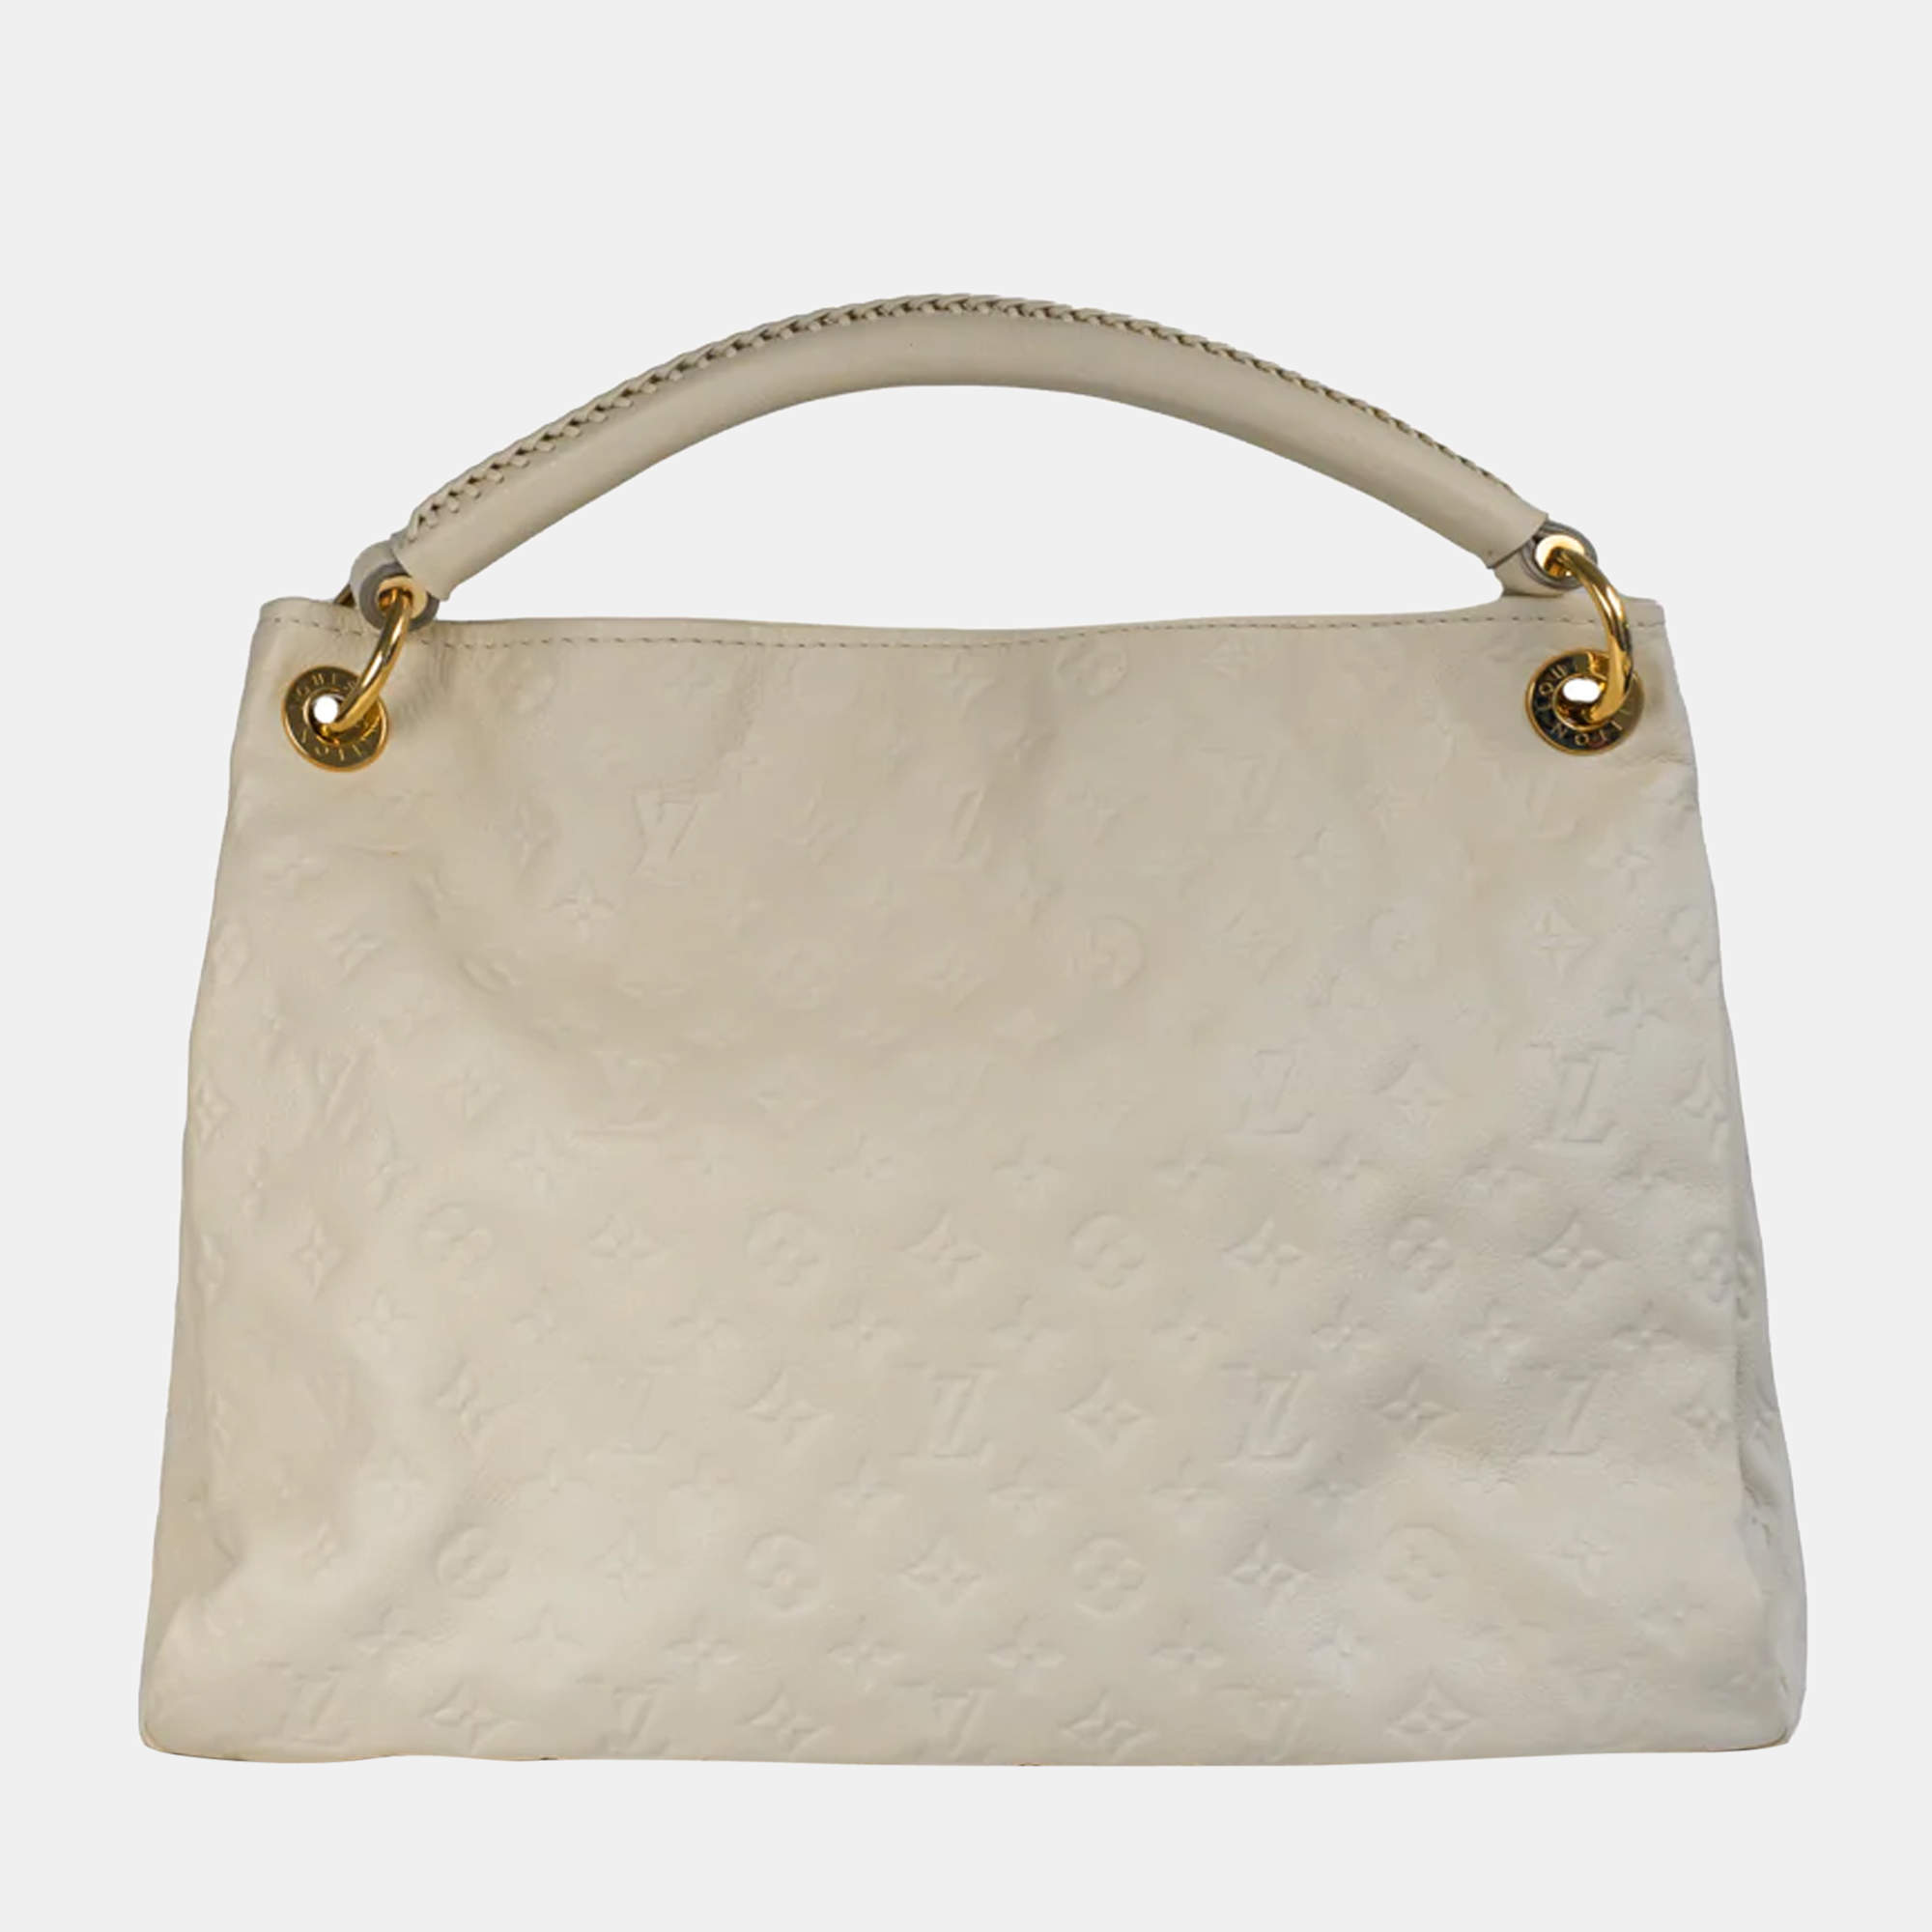 Louis Vuitton Artsy Handbag in White Leather